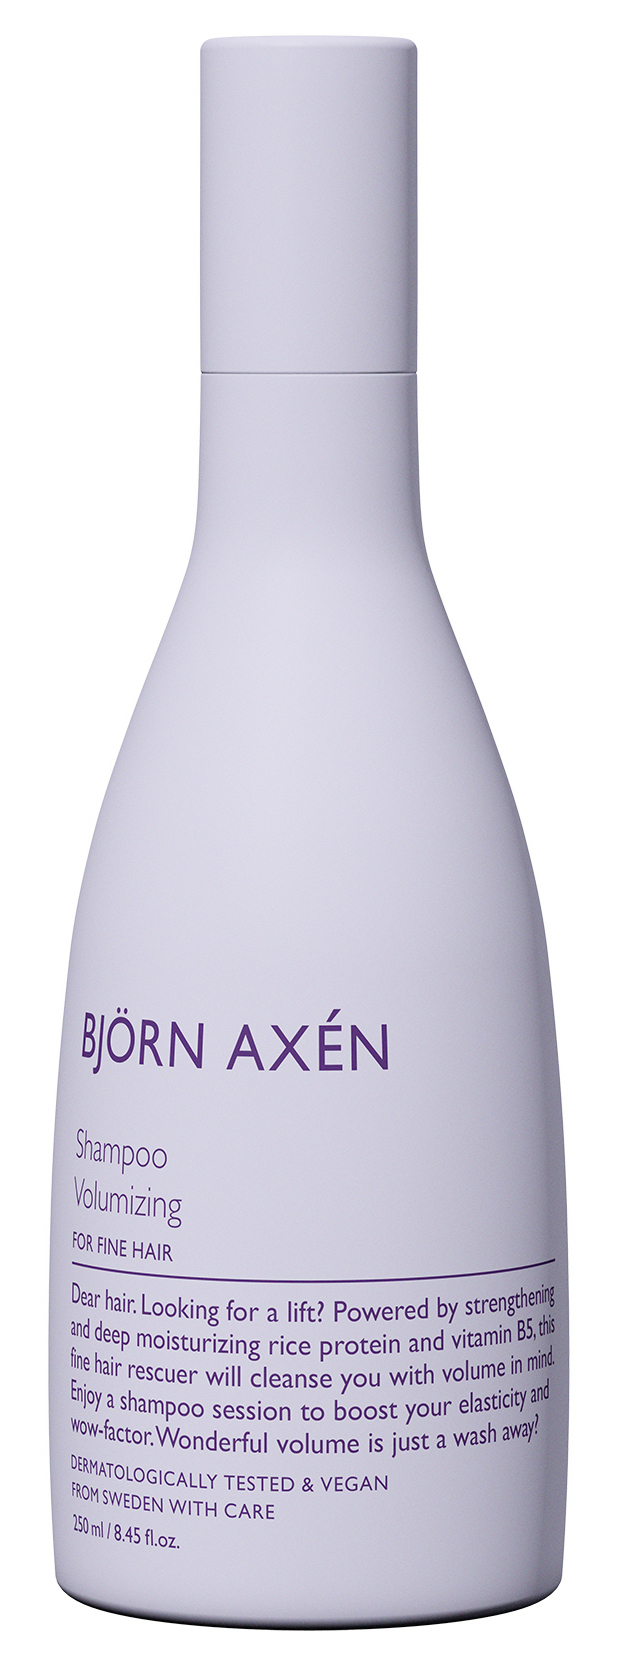 Björn Axén - Шампунь для об'єму волосся Volumizing Shampoo - Зображення 1